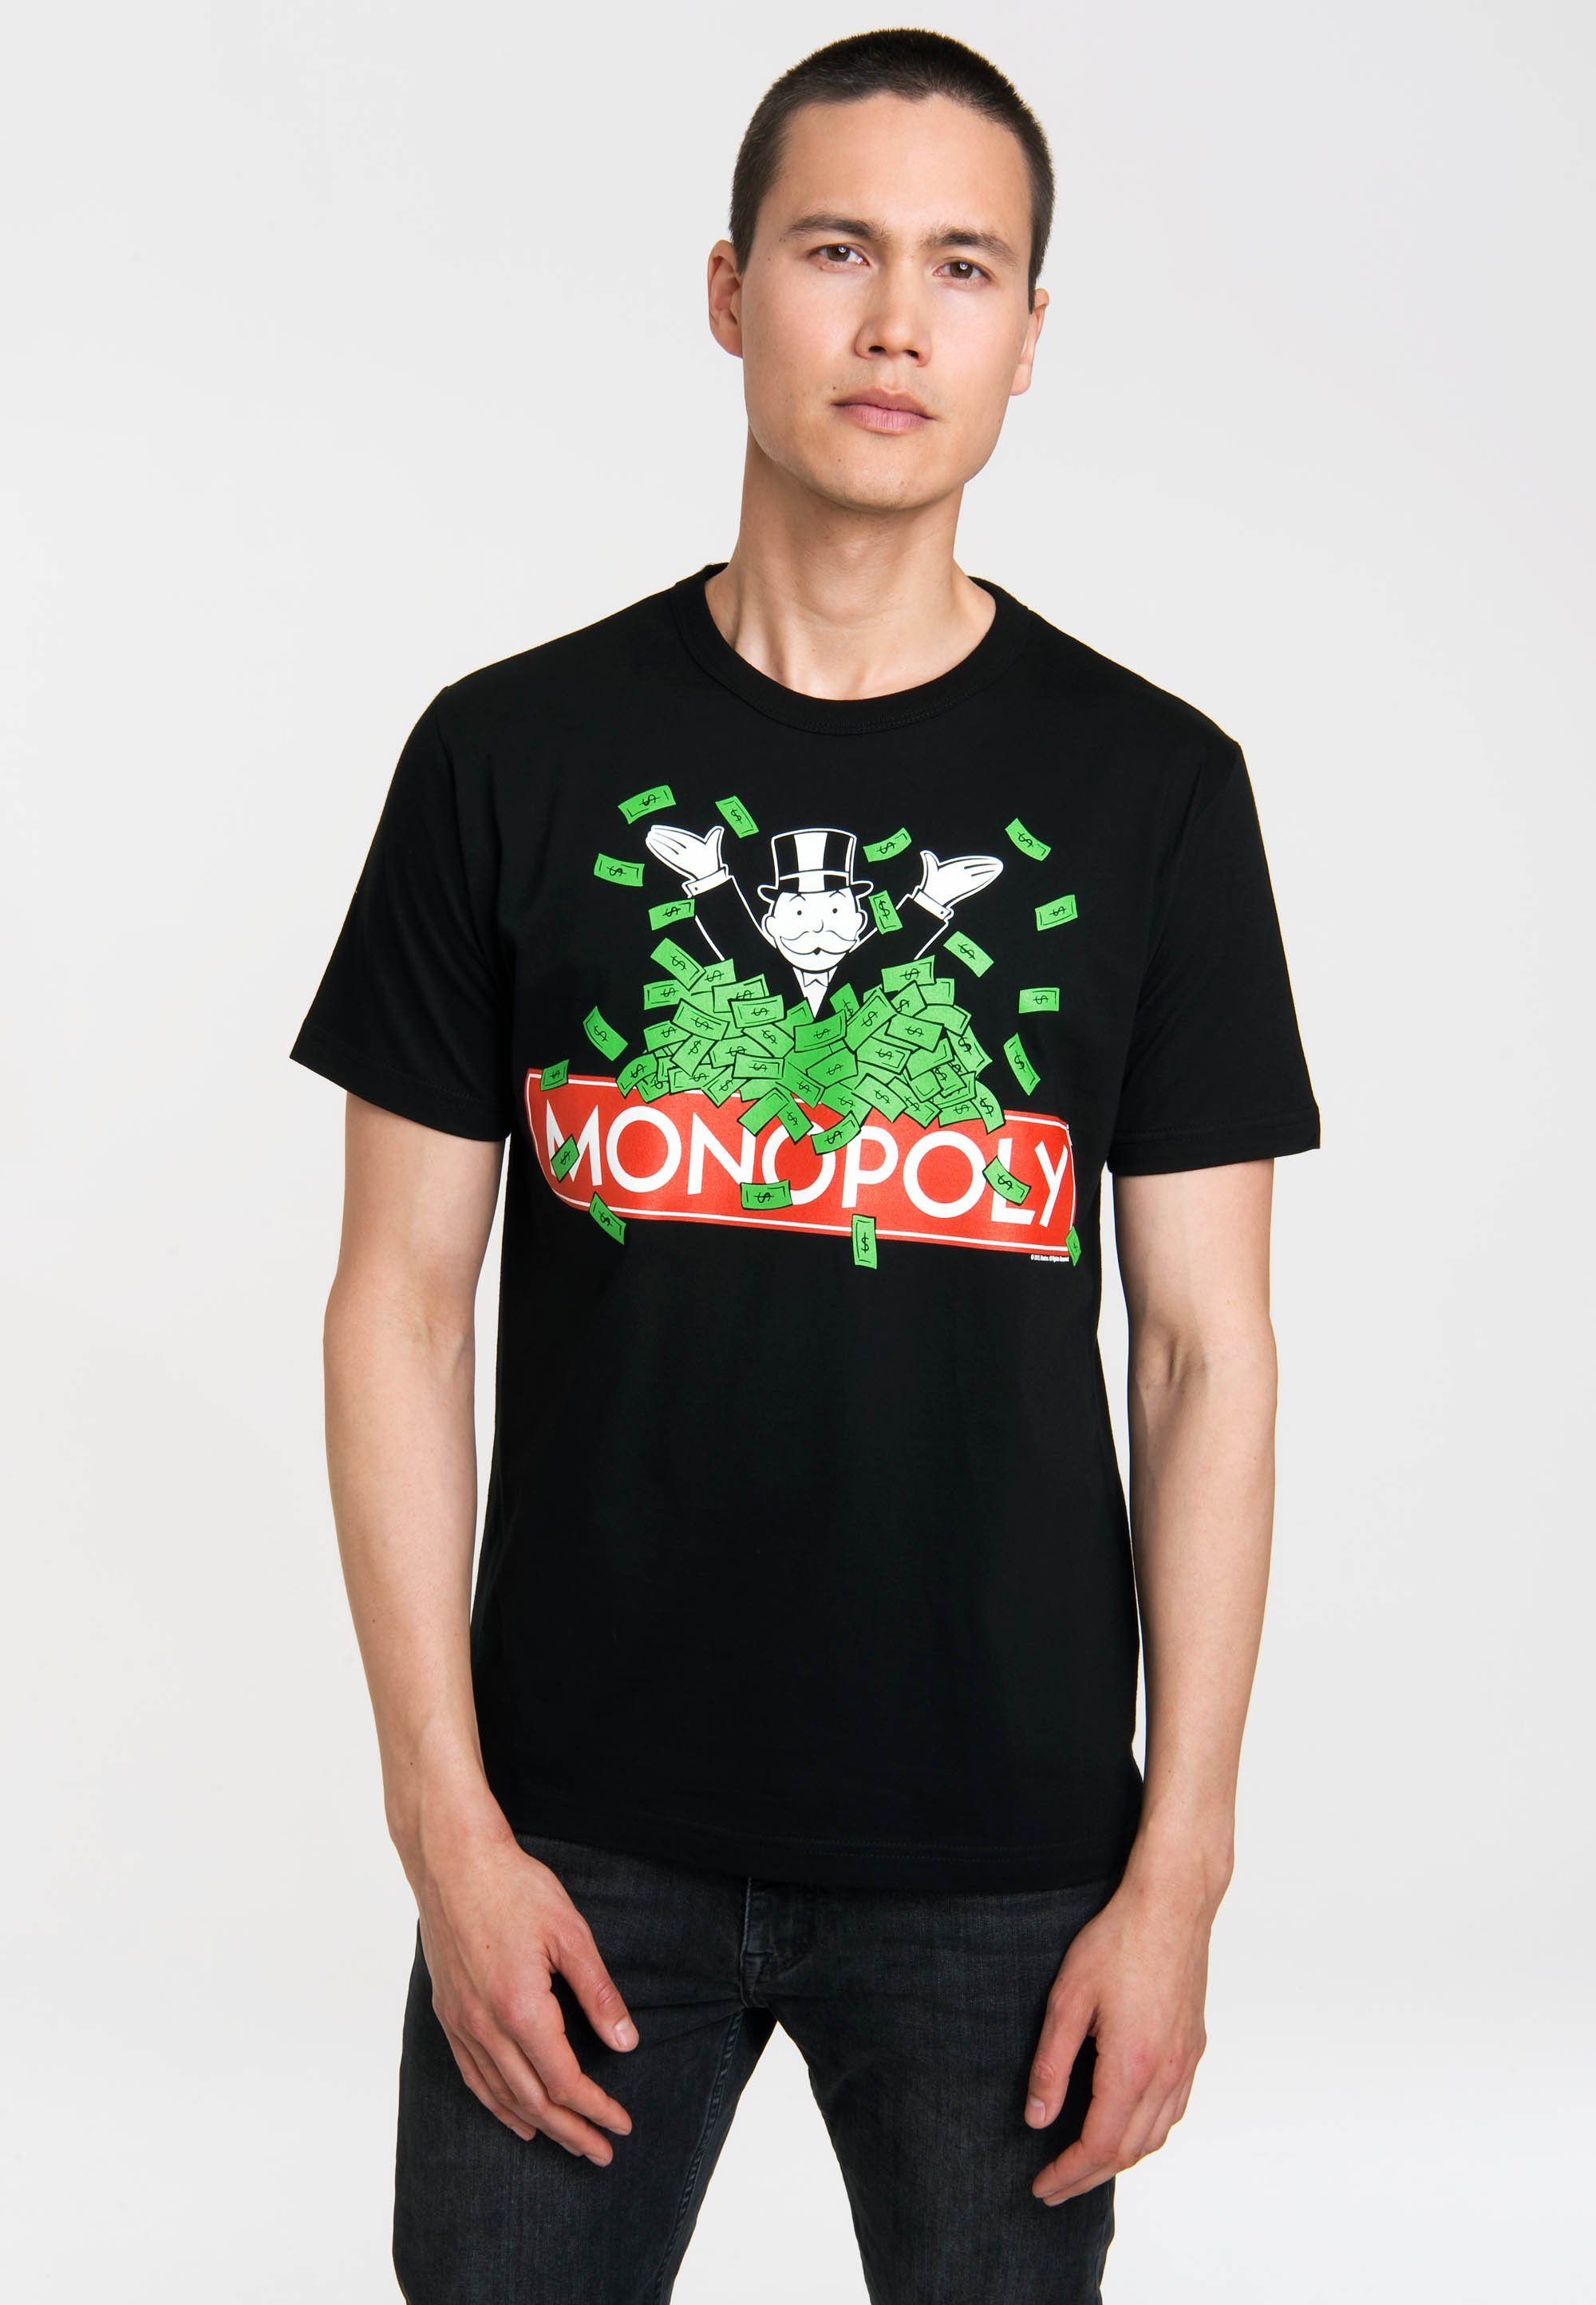 LOGOSHIRT Design mit Monopoly T-Shirt tollem